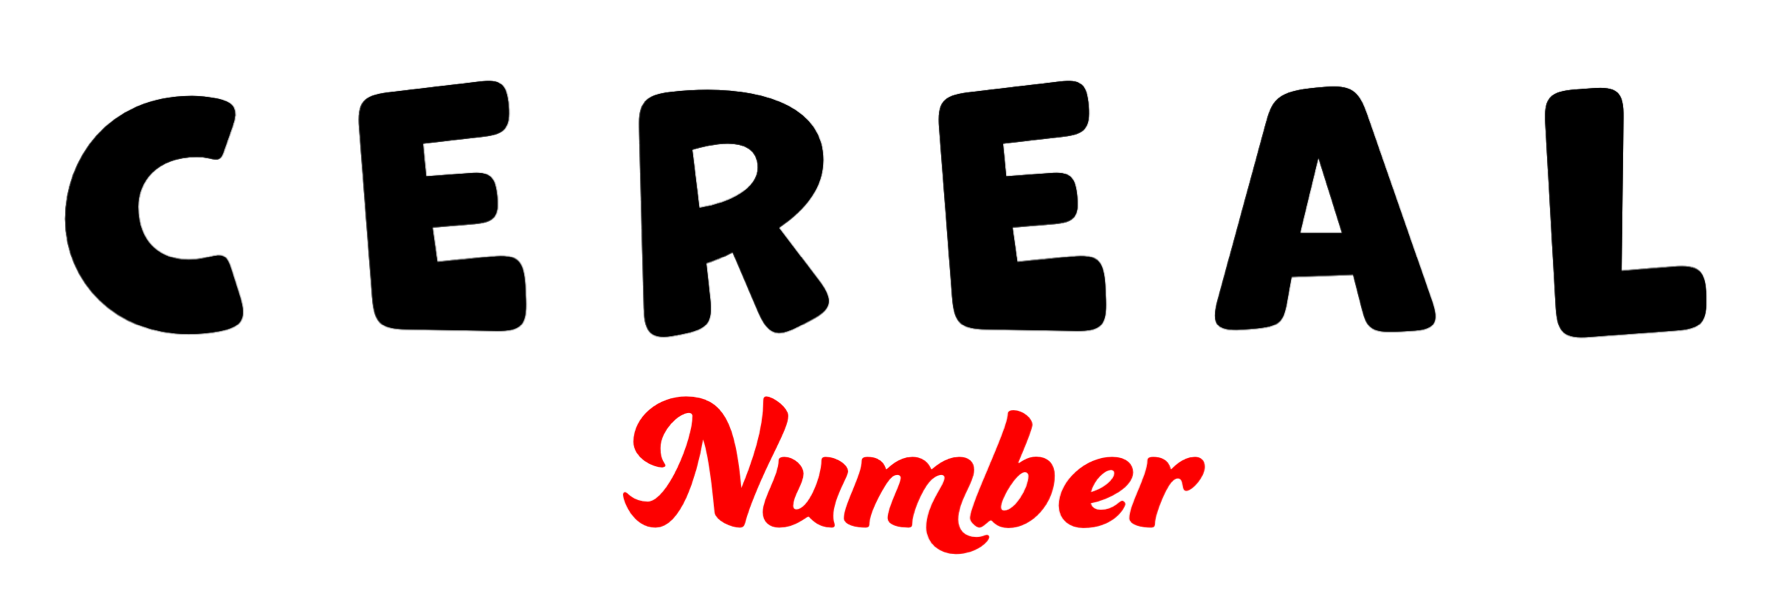 Cereal Number